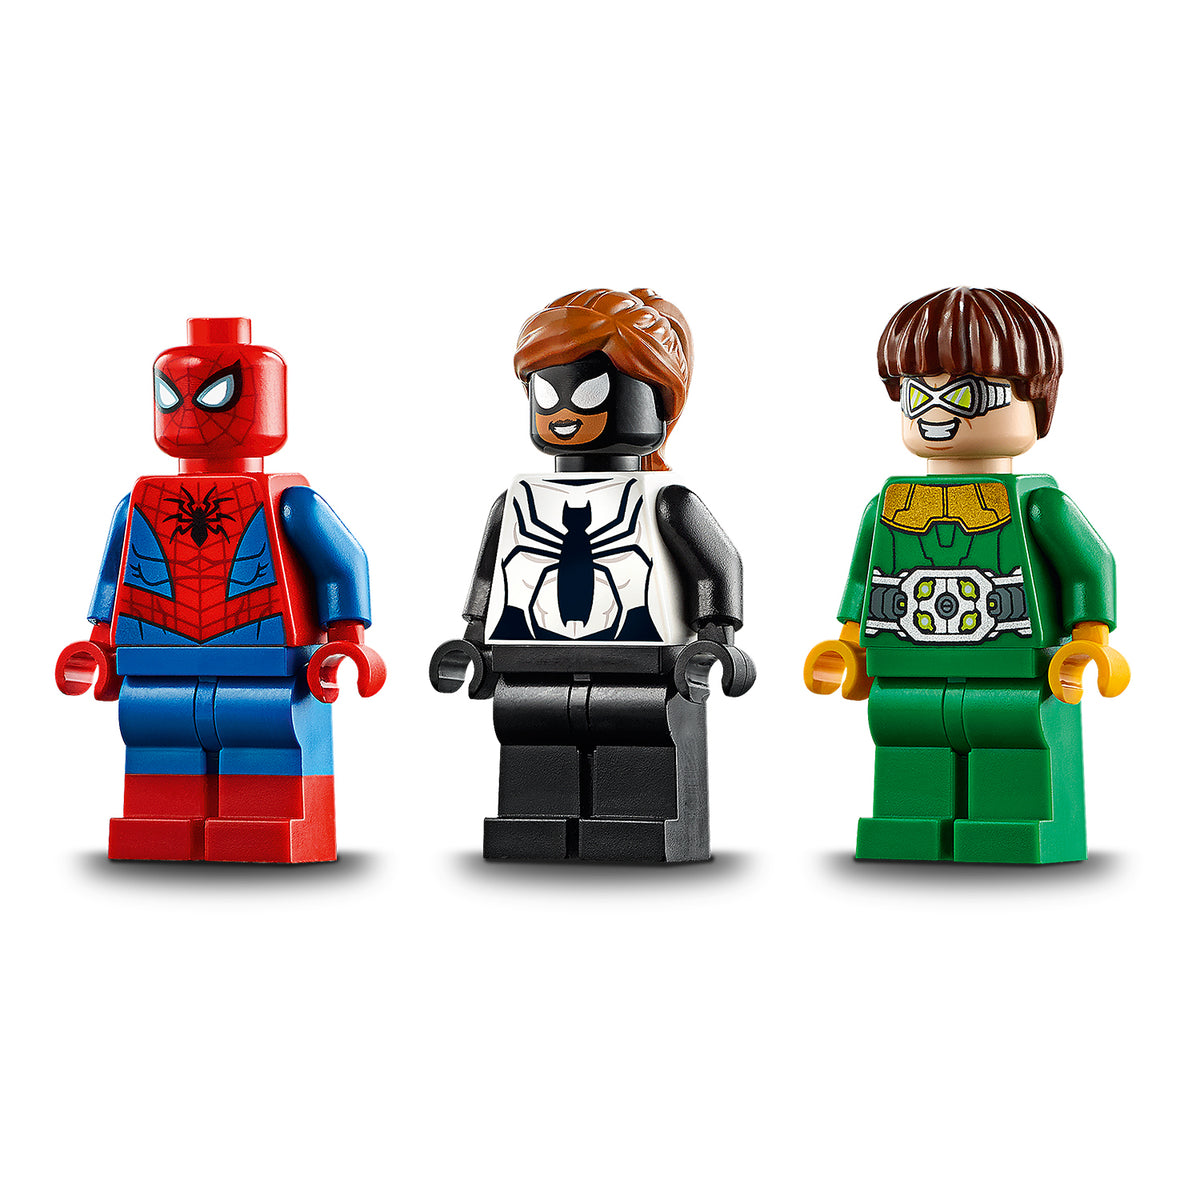 LEGO® Marvel Spider-Man vs. Doc Ock Playset 76148 Default Title